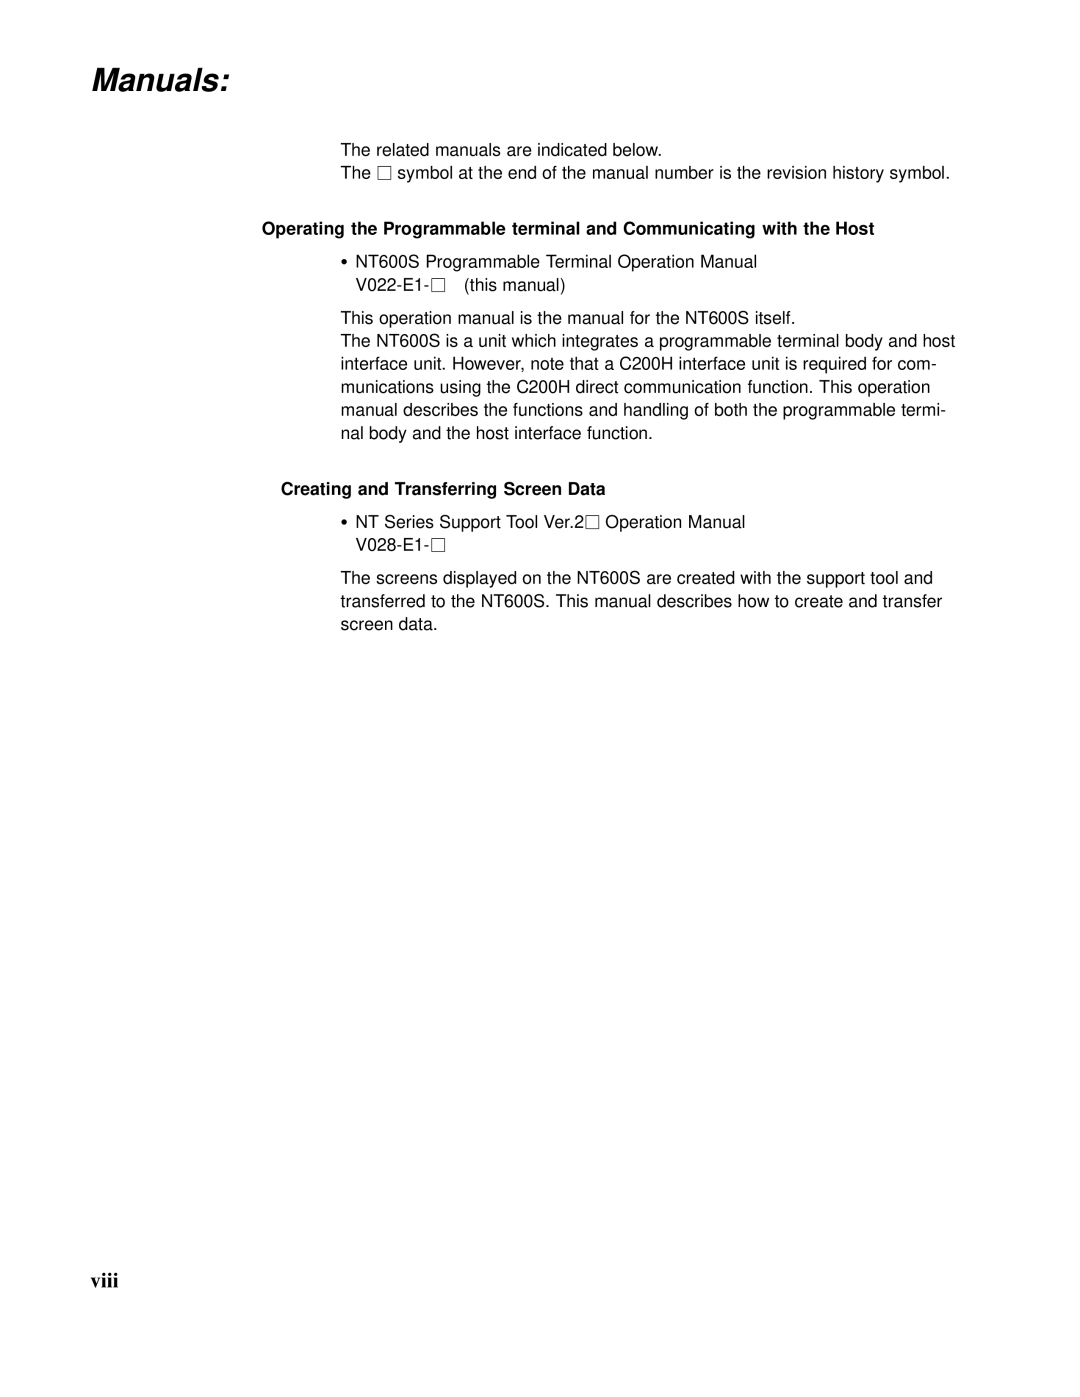 Omron V022-E3-1 operation manual Manuals, Creatingand Transferring Screen Data 